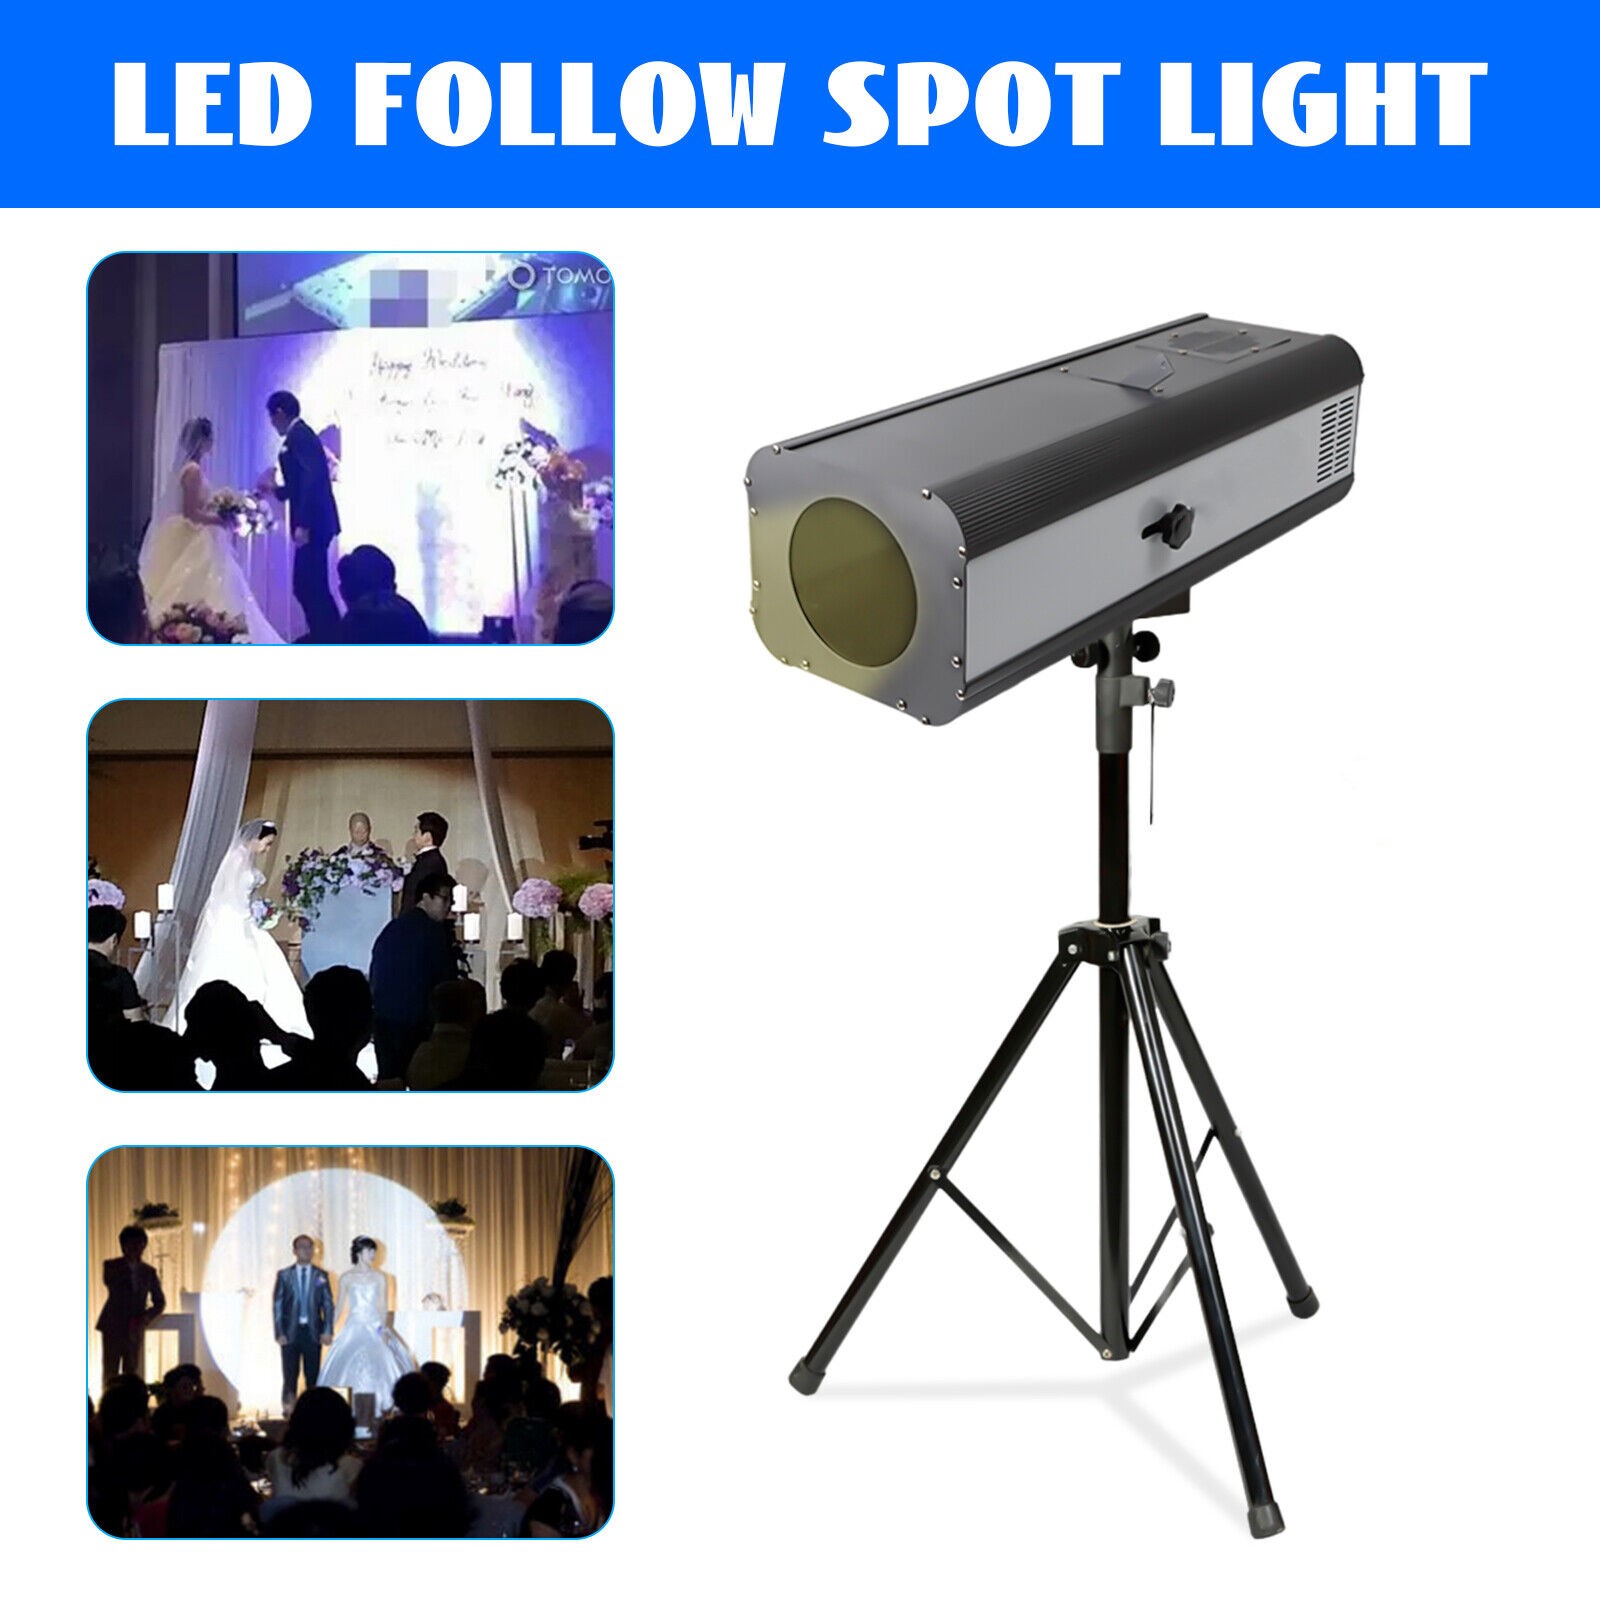 LED Follow Spot Light 380W With Flight Case